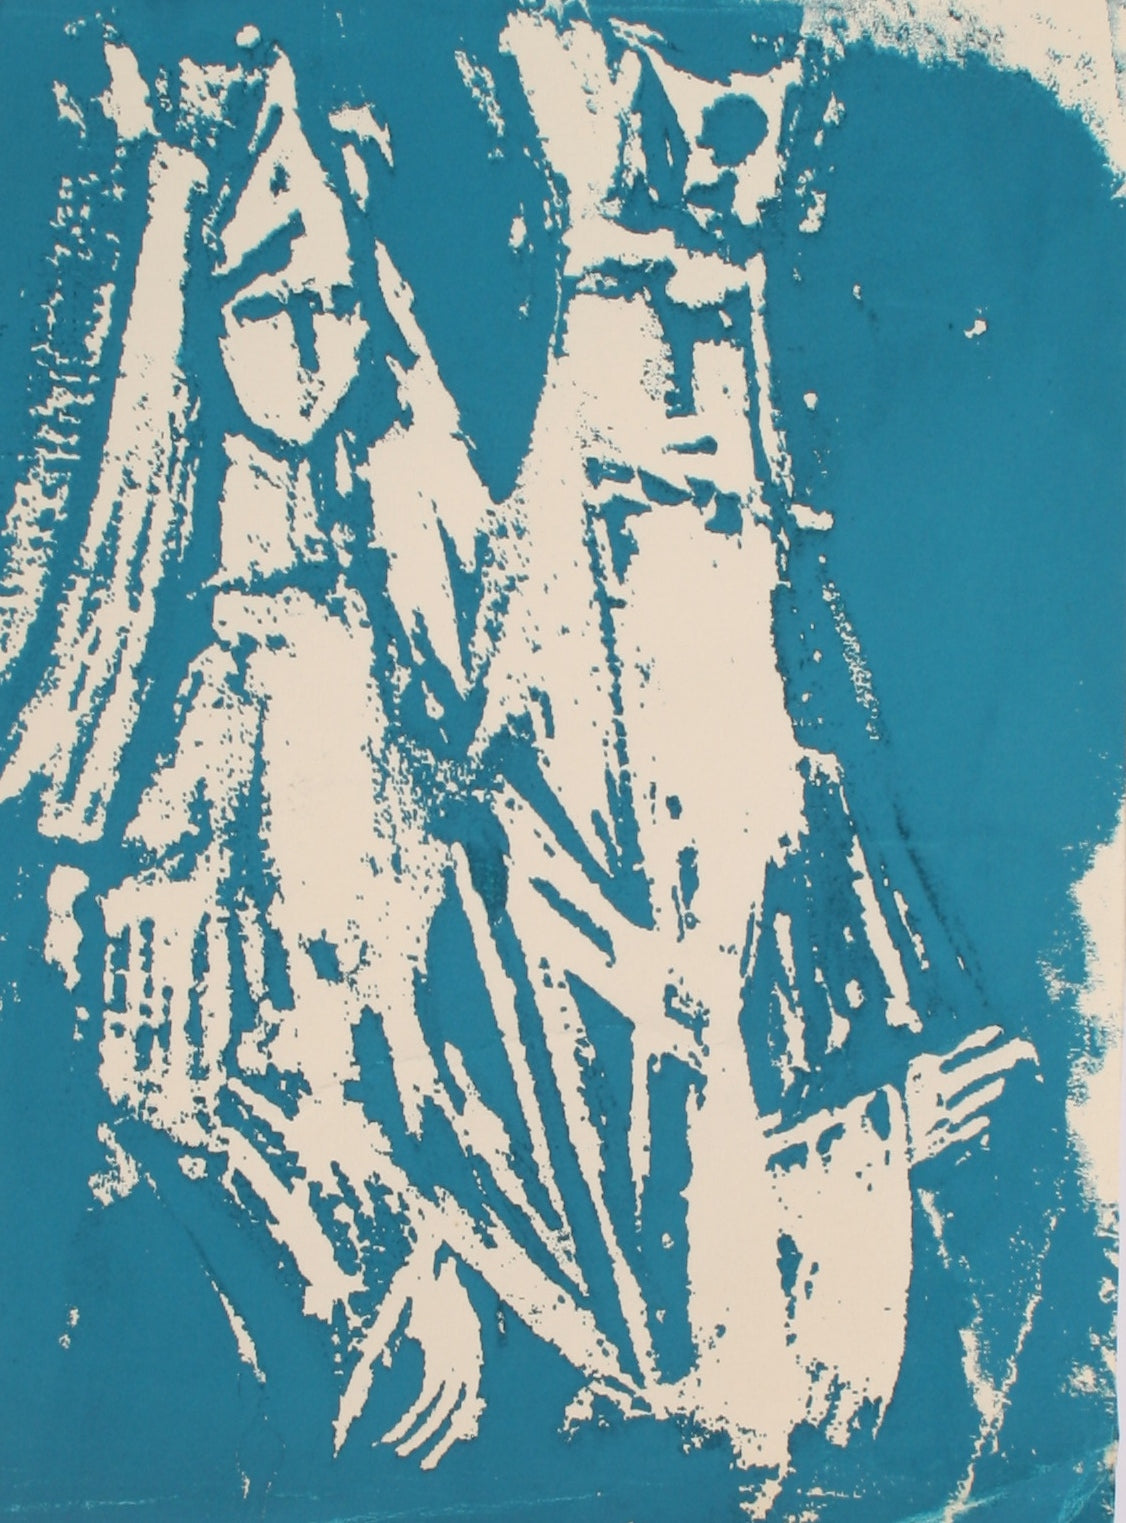 Abstracted Figures in Blue&lt;br&gt;Late Century Serigraph&lt;br&gt;&lt;br&gt;#71349